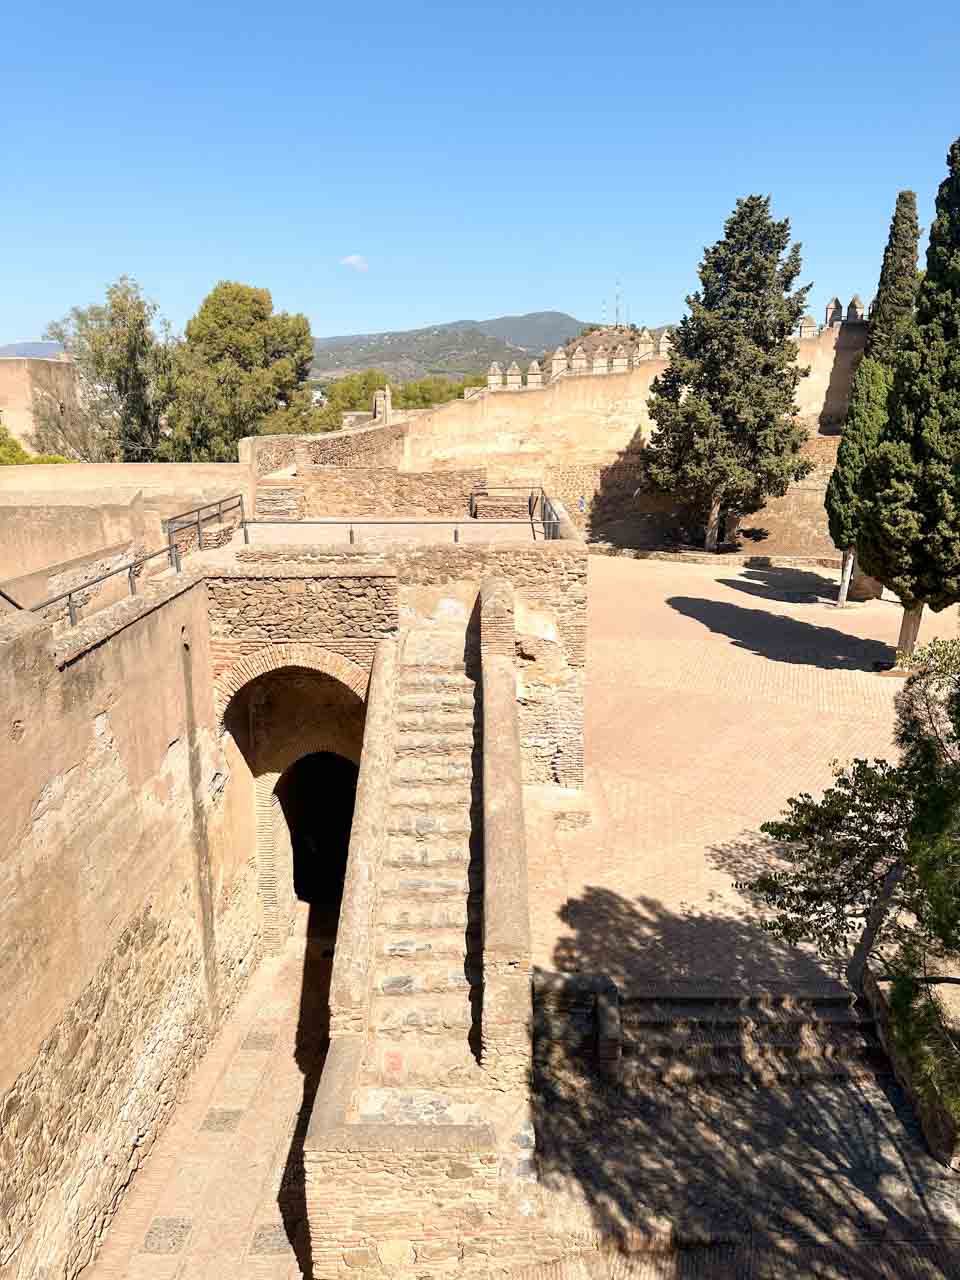 A walkway leading through a brick archway inside the Gibralfaro Castle in Malaga, Spain